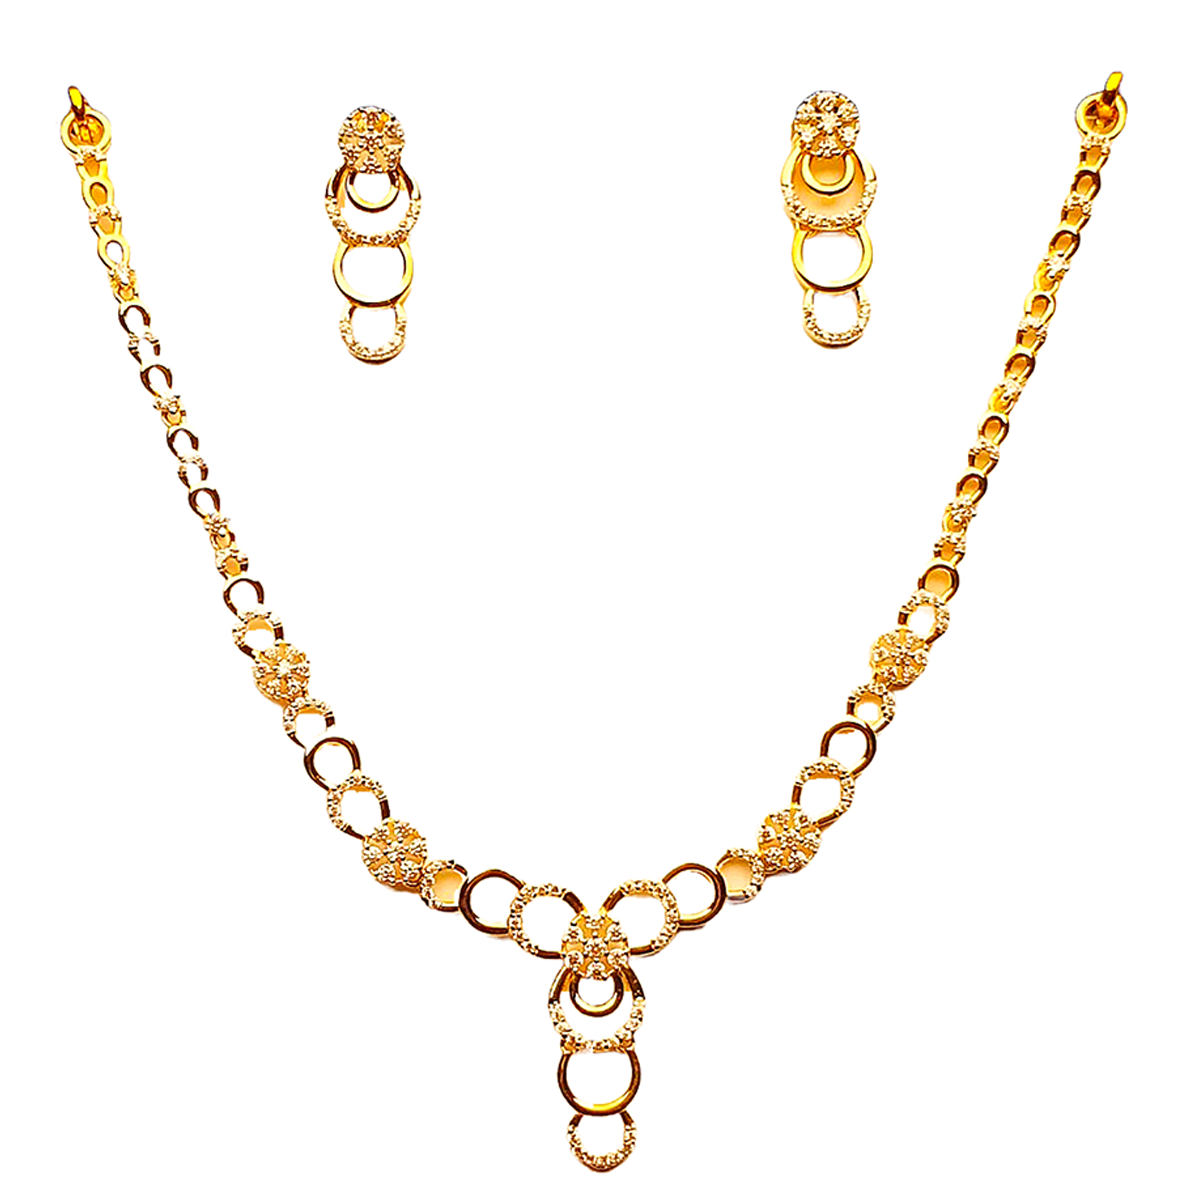 Krishnammal gold necklace